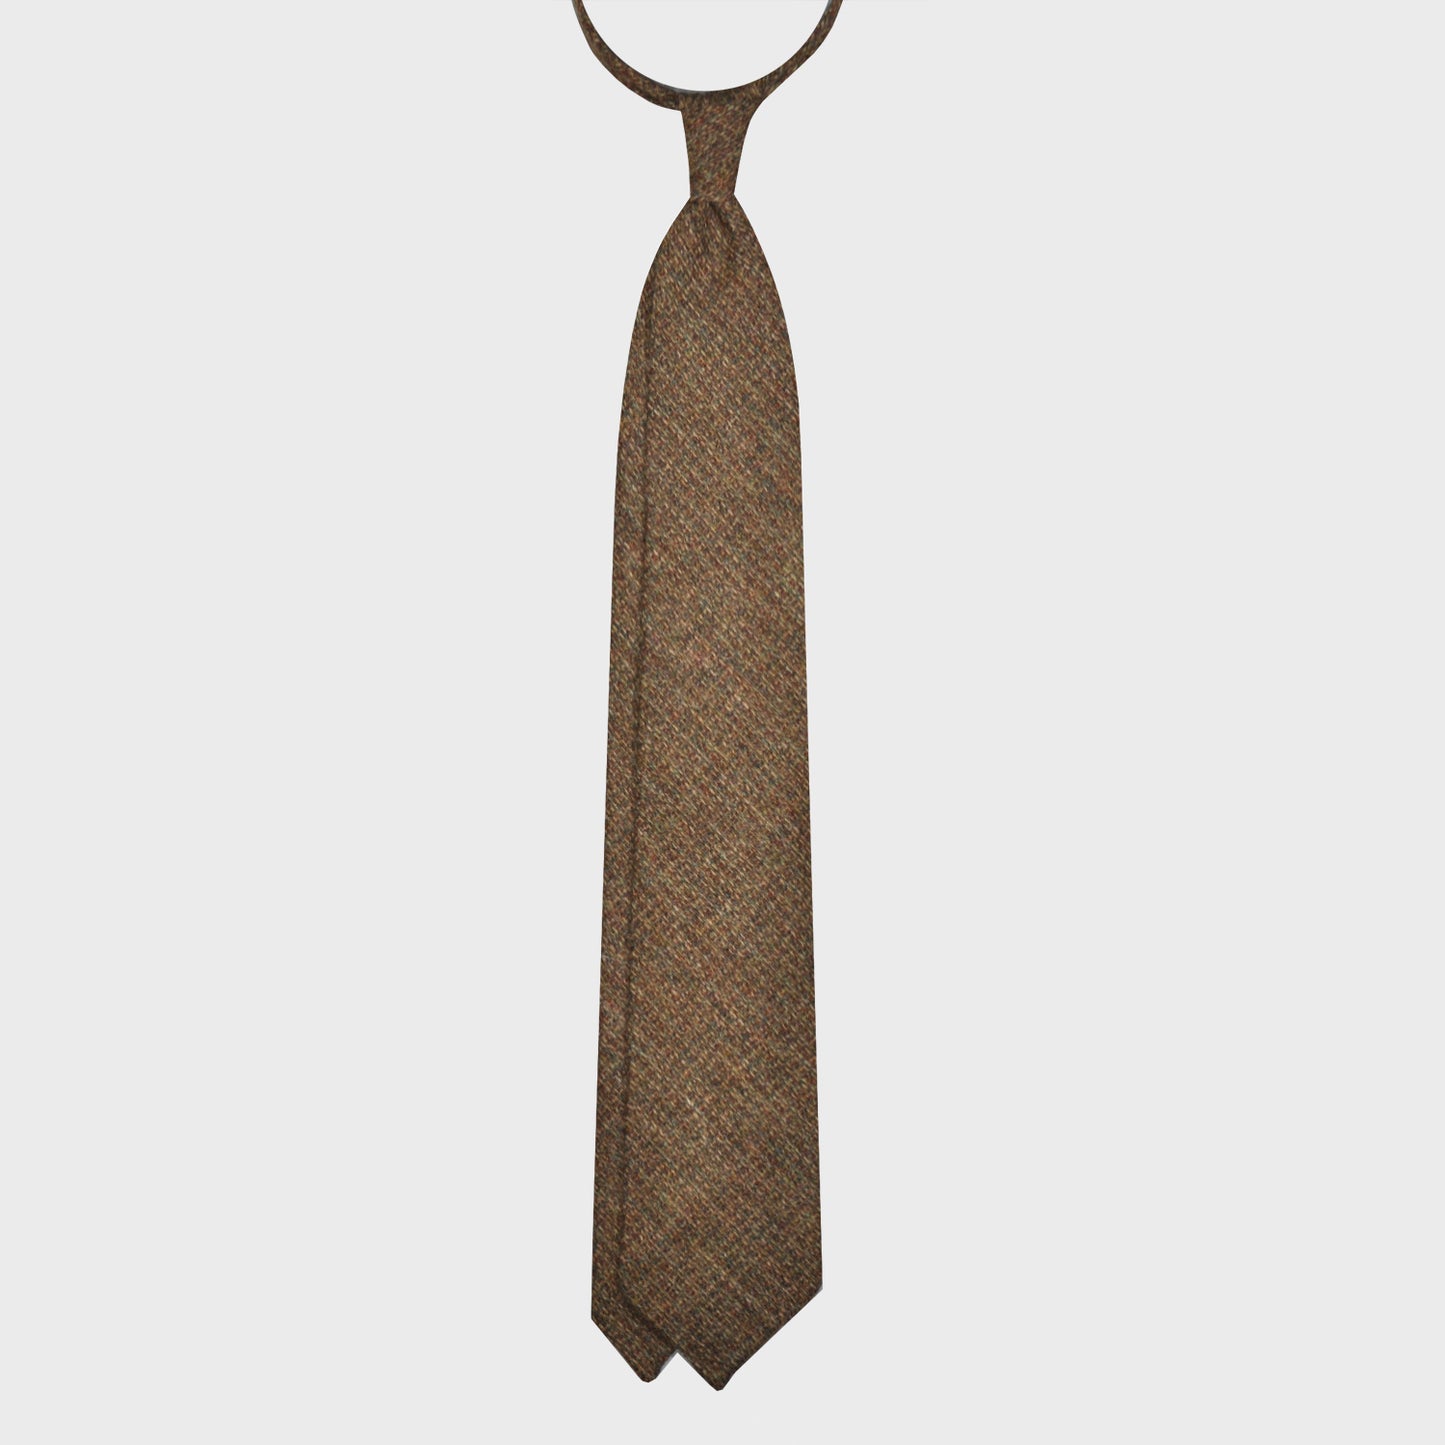 Copper Brown Tweed Necktie Classic Plain Color